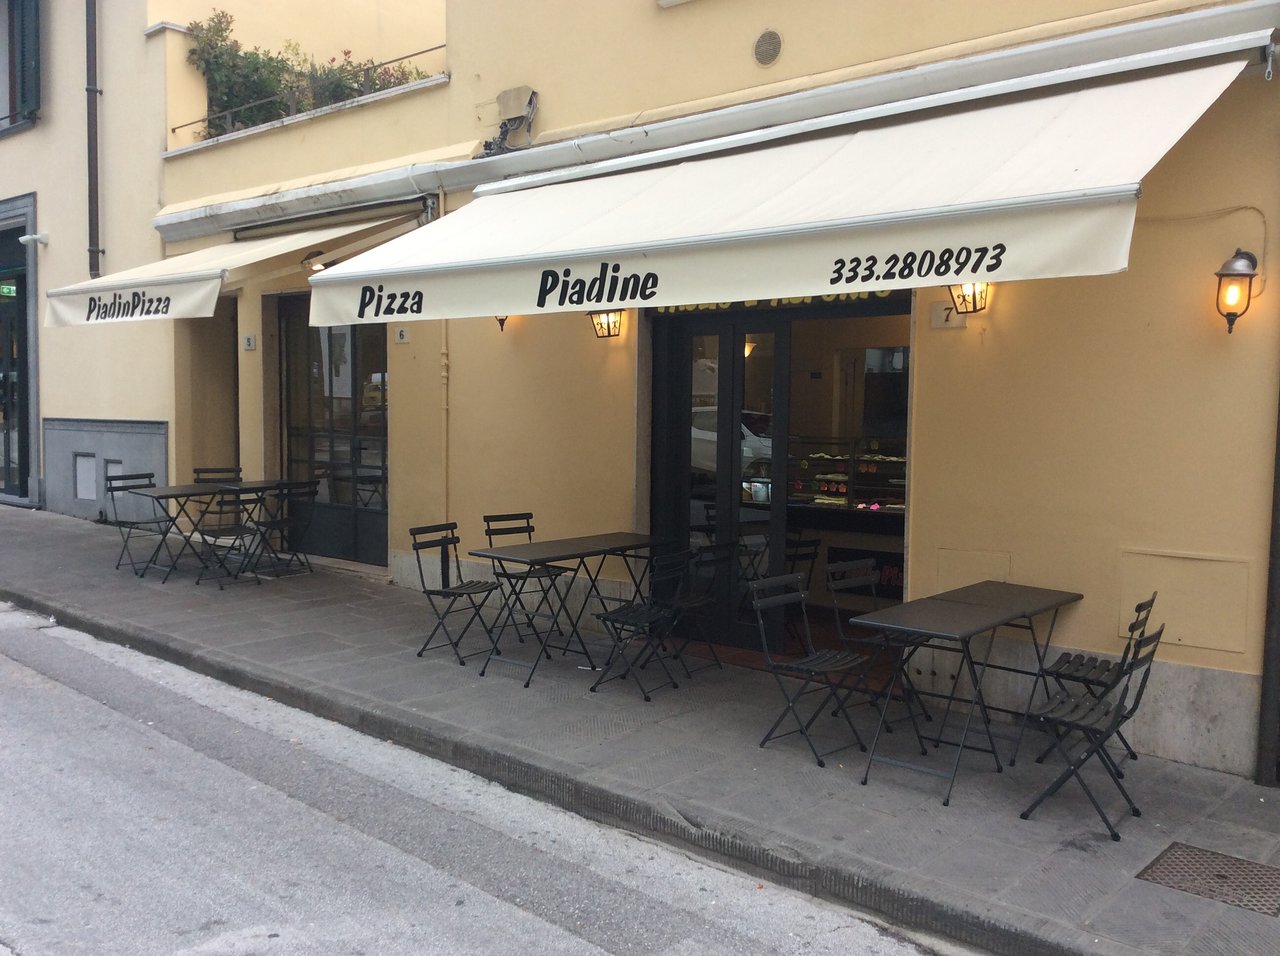 Piadinpizza, Pietrasanta